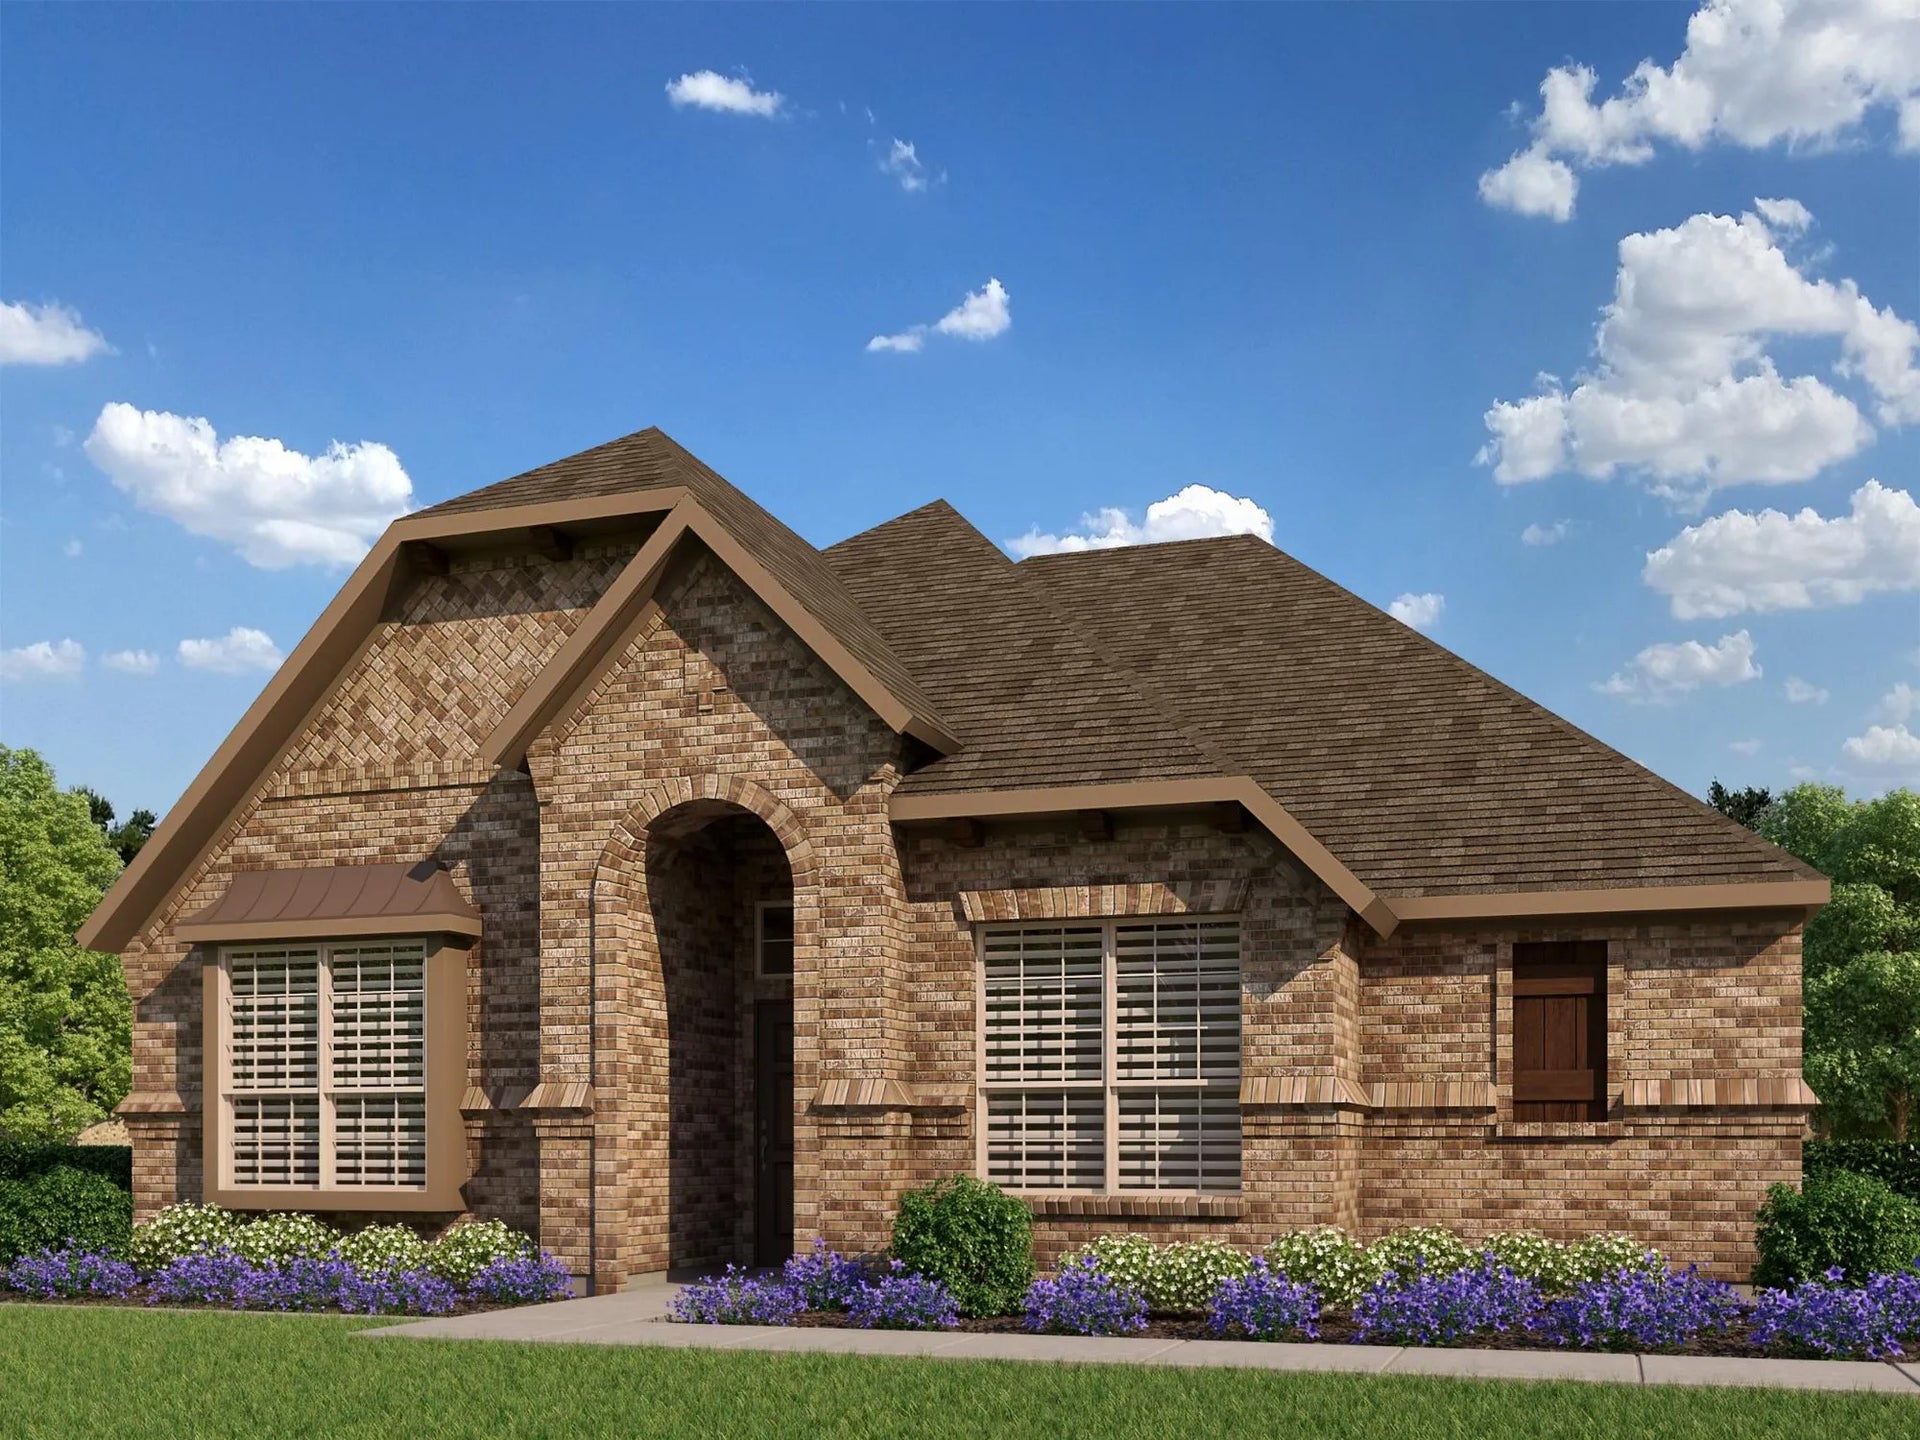 1802 C. Concept 1802 New Home in Heartland, TX